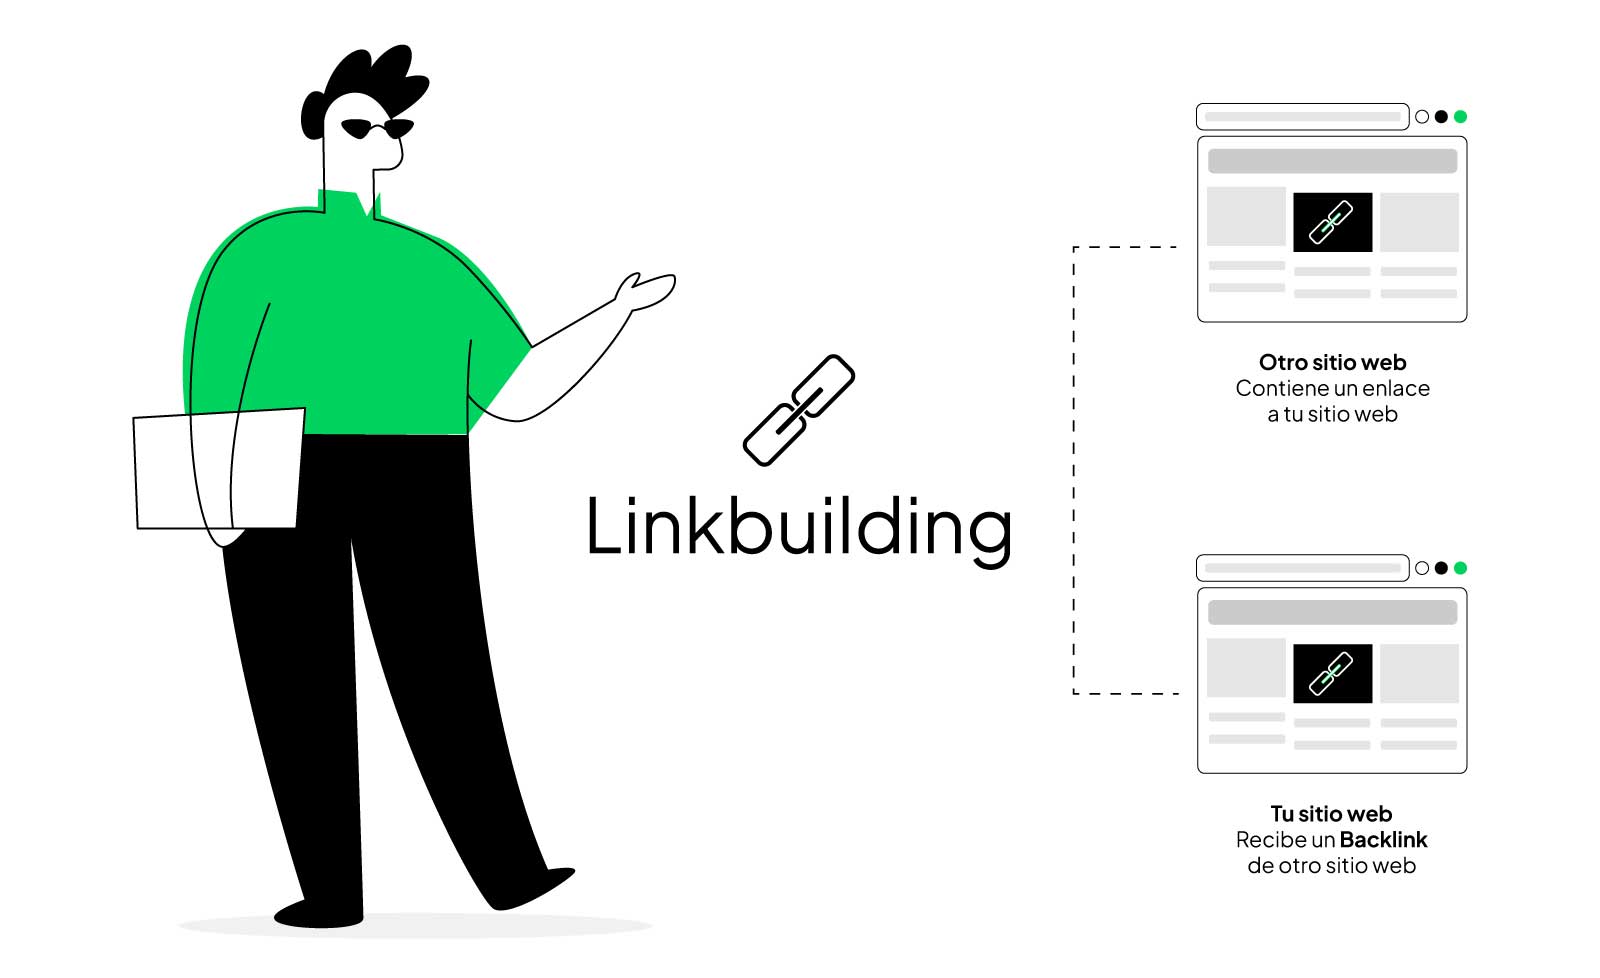 linkbuilding 1